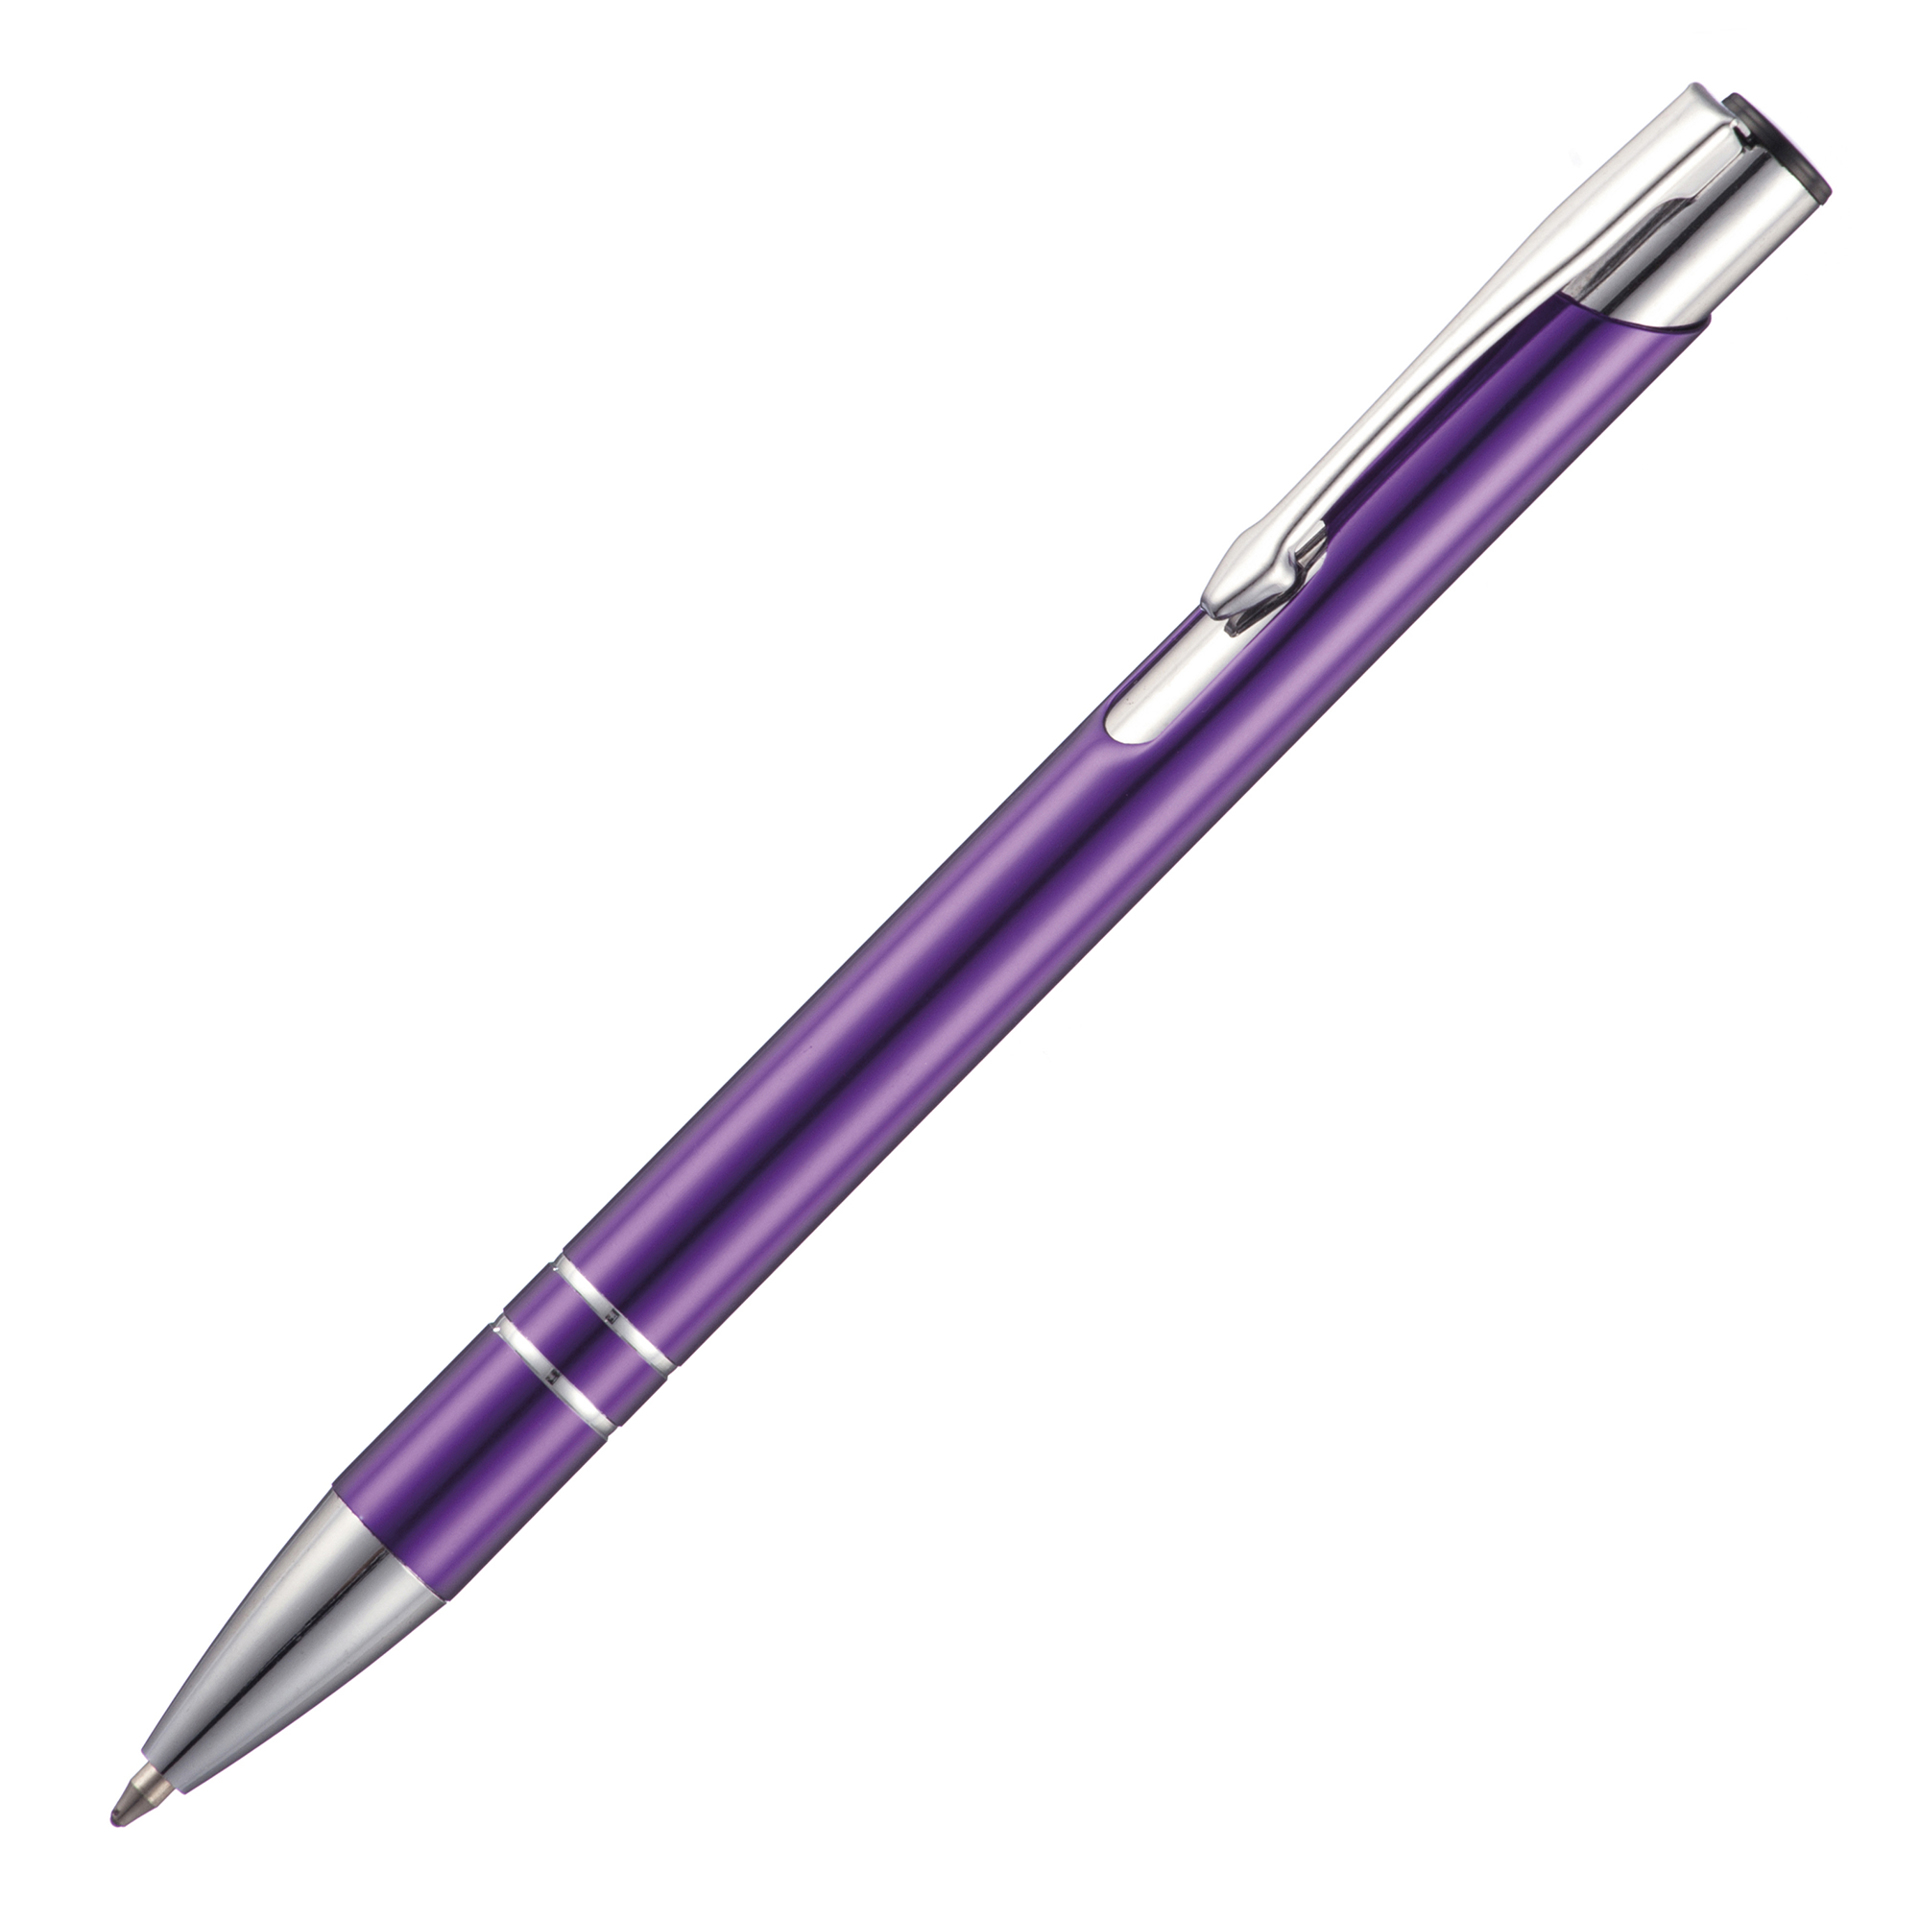 Beck Metal Pen in purple